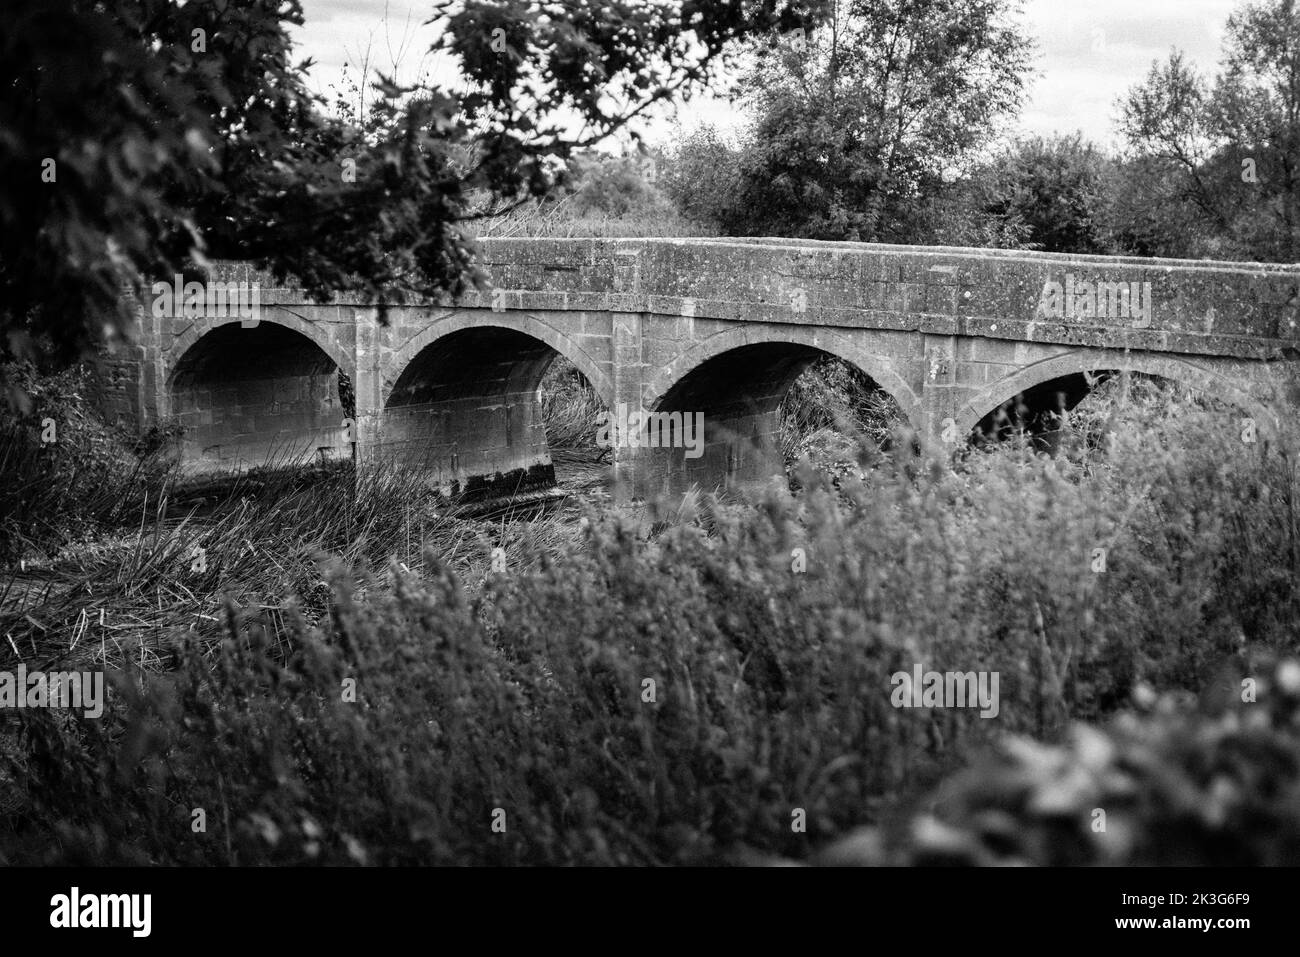 The old arched stone bridge crossing the River Avon in Reybridge (Rey Bridge) near Lacock, Wiltshire, England Stock Photo